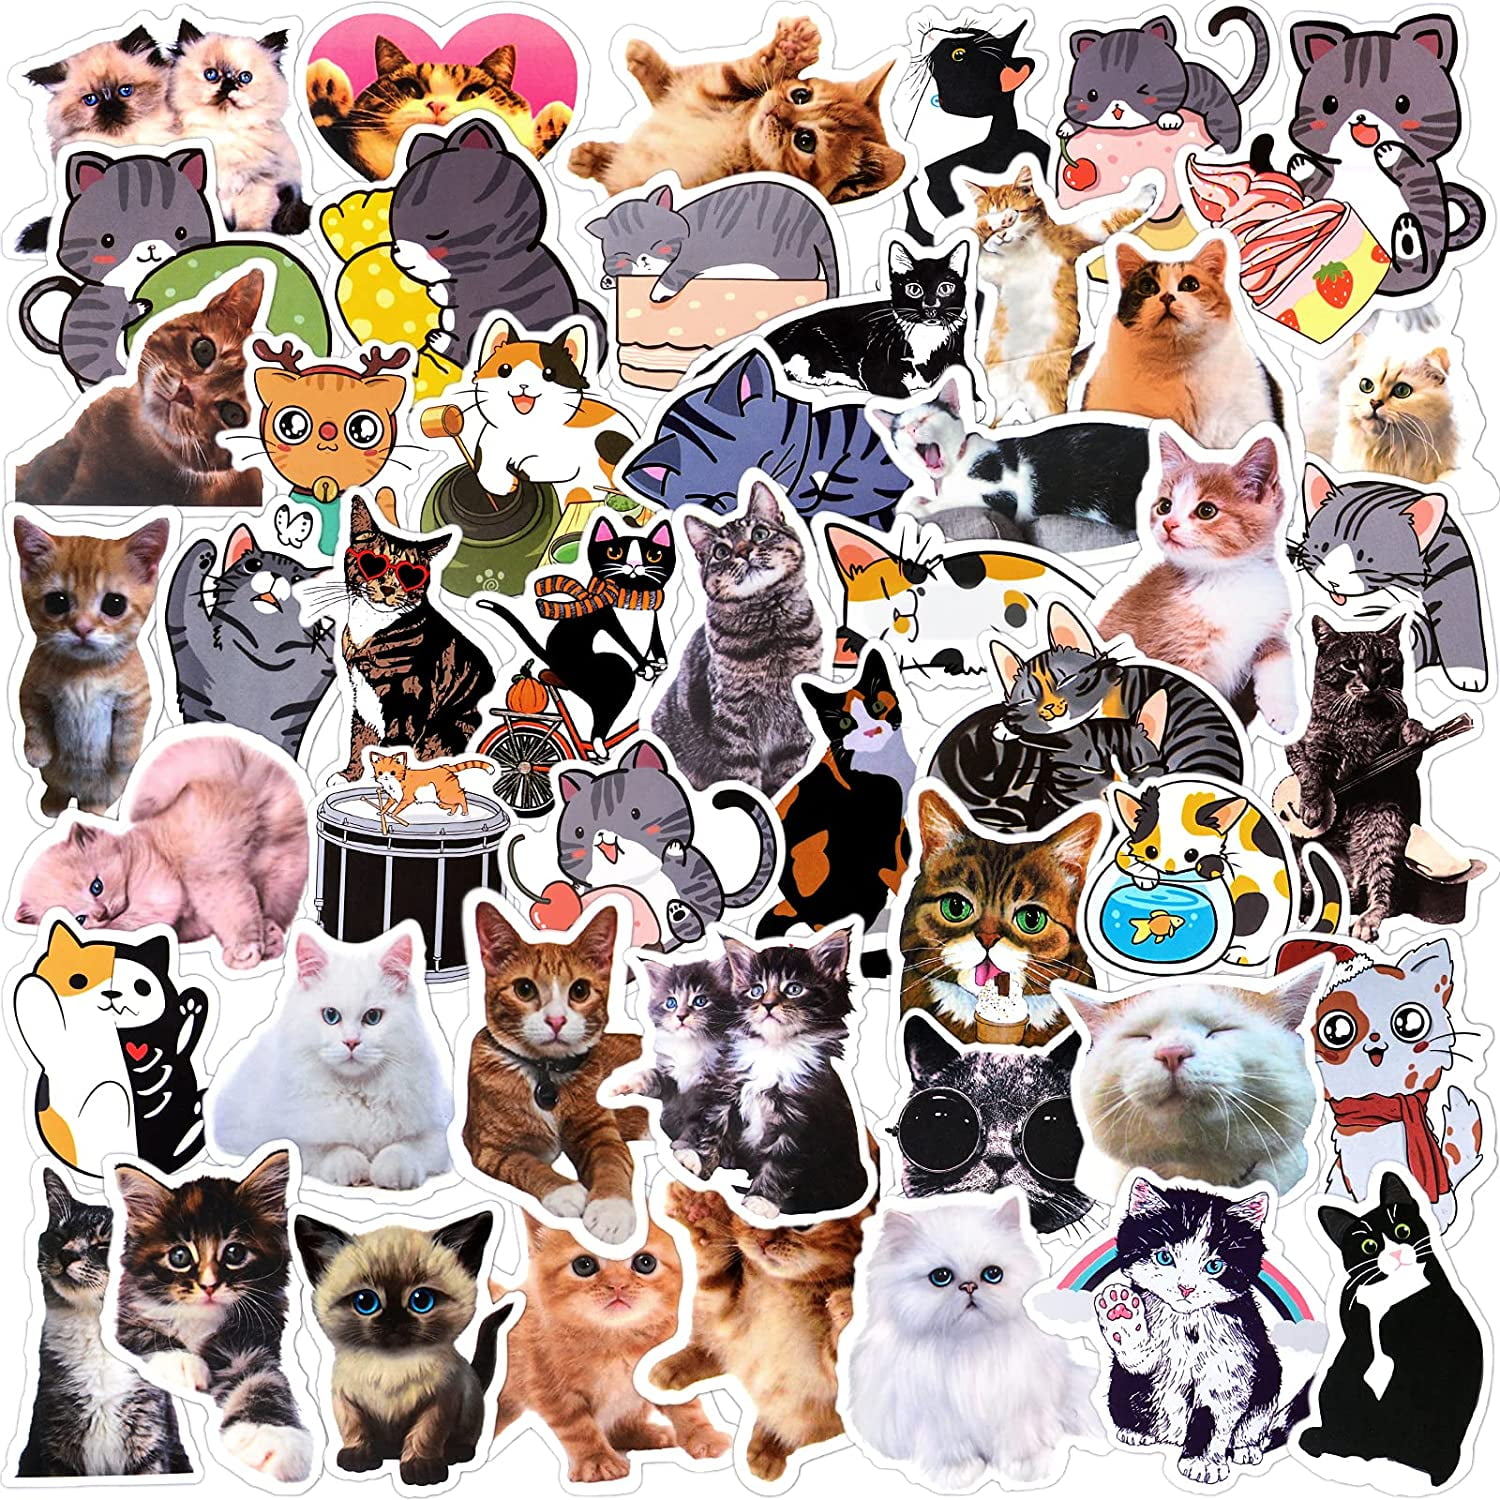 50PCS Cute Cat Kitten Pet Vinyl Stickers for Laptop Luggage Graffiti Wall Decal